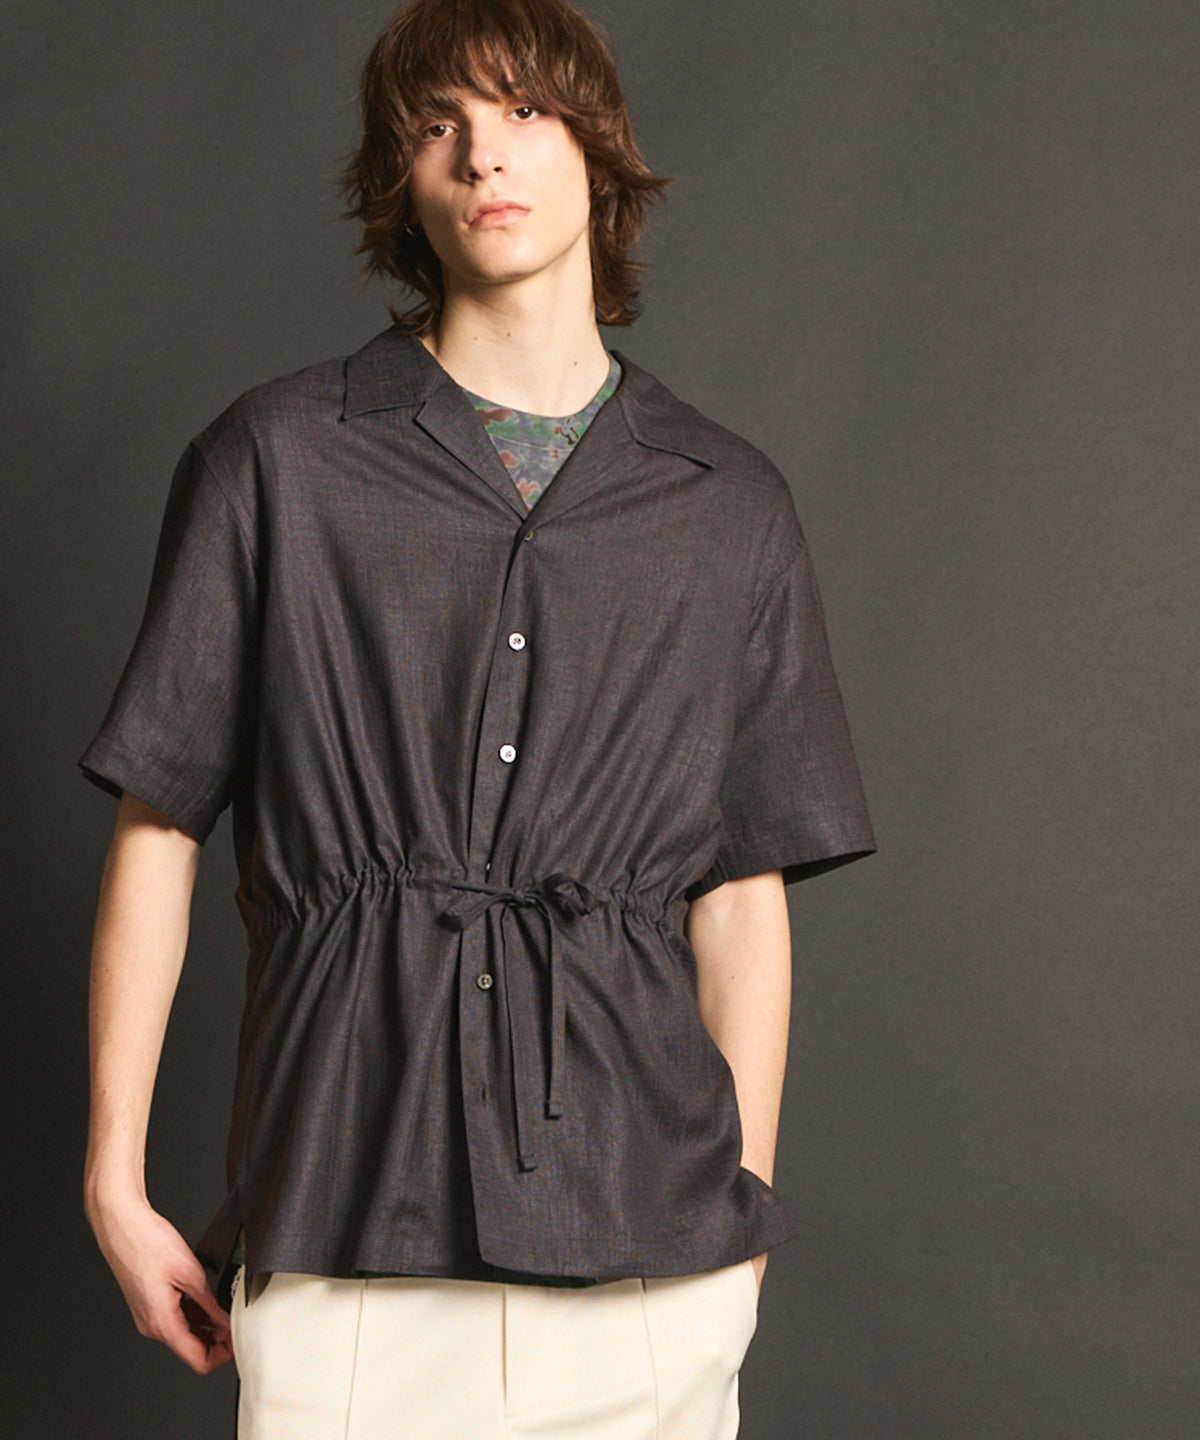 【SALE】Calendering Triacetate Dress-Over Short Sleeve Open Collar Shirt